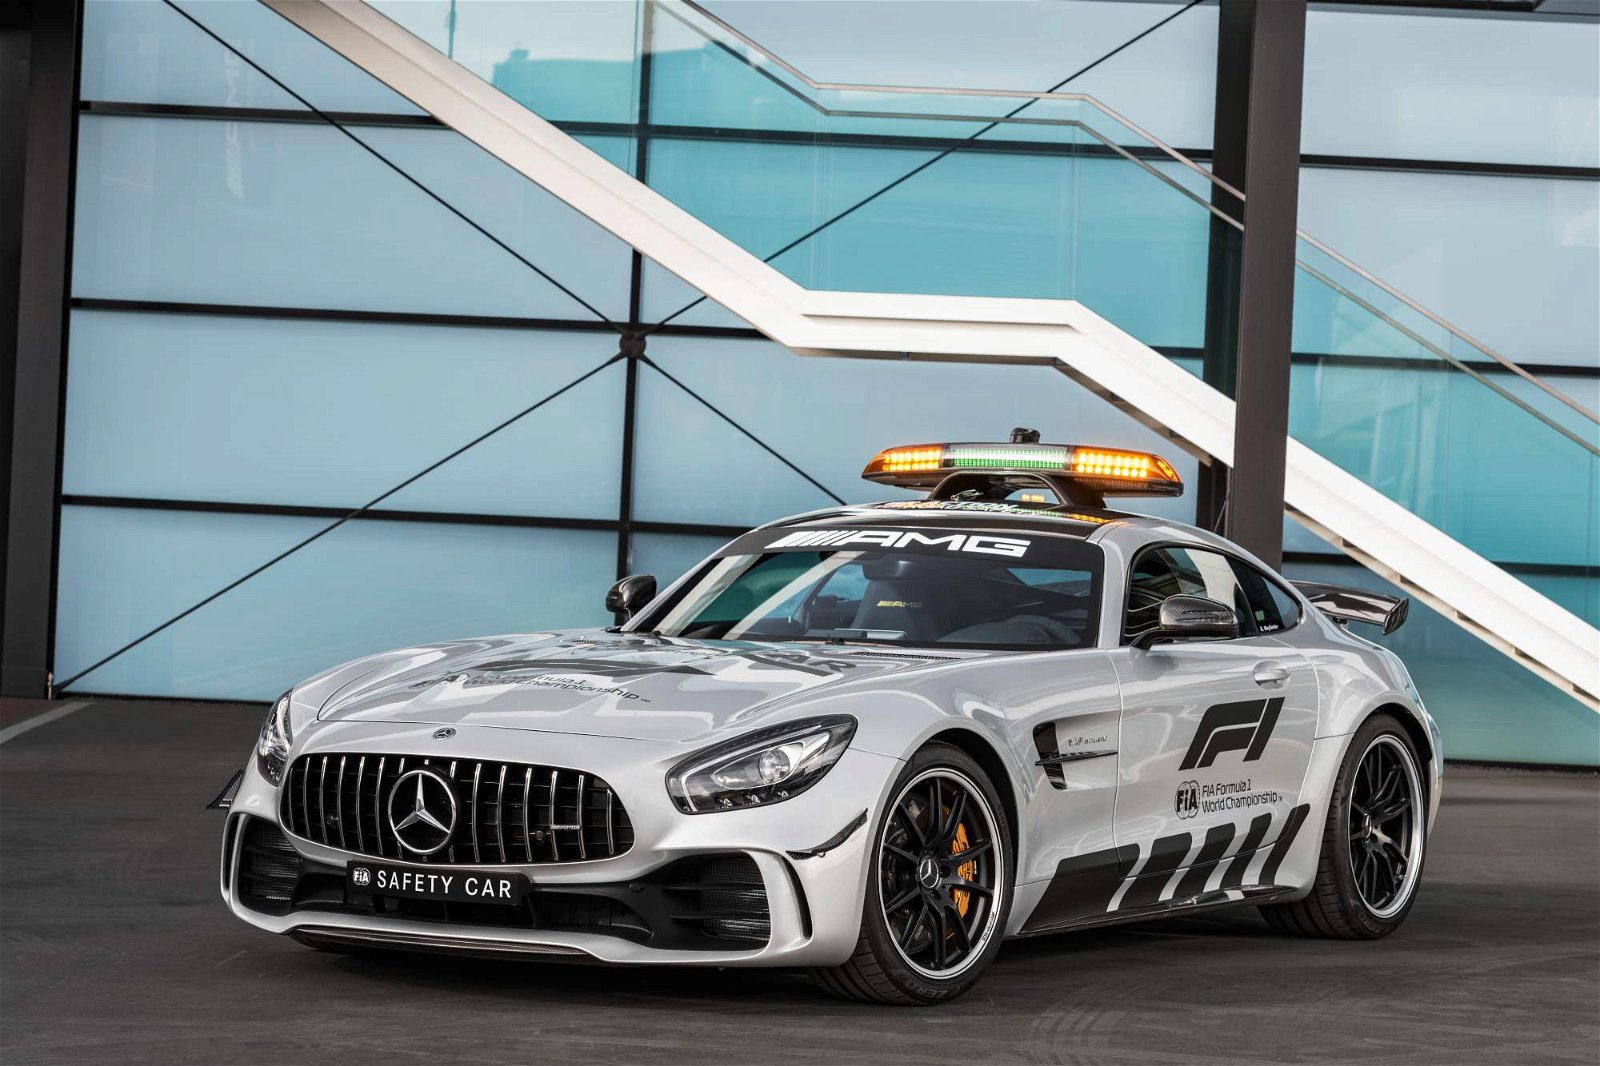 Mercedes-AMG-GT-R-Official-F1-Safety-Car-2018-19